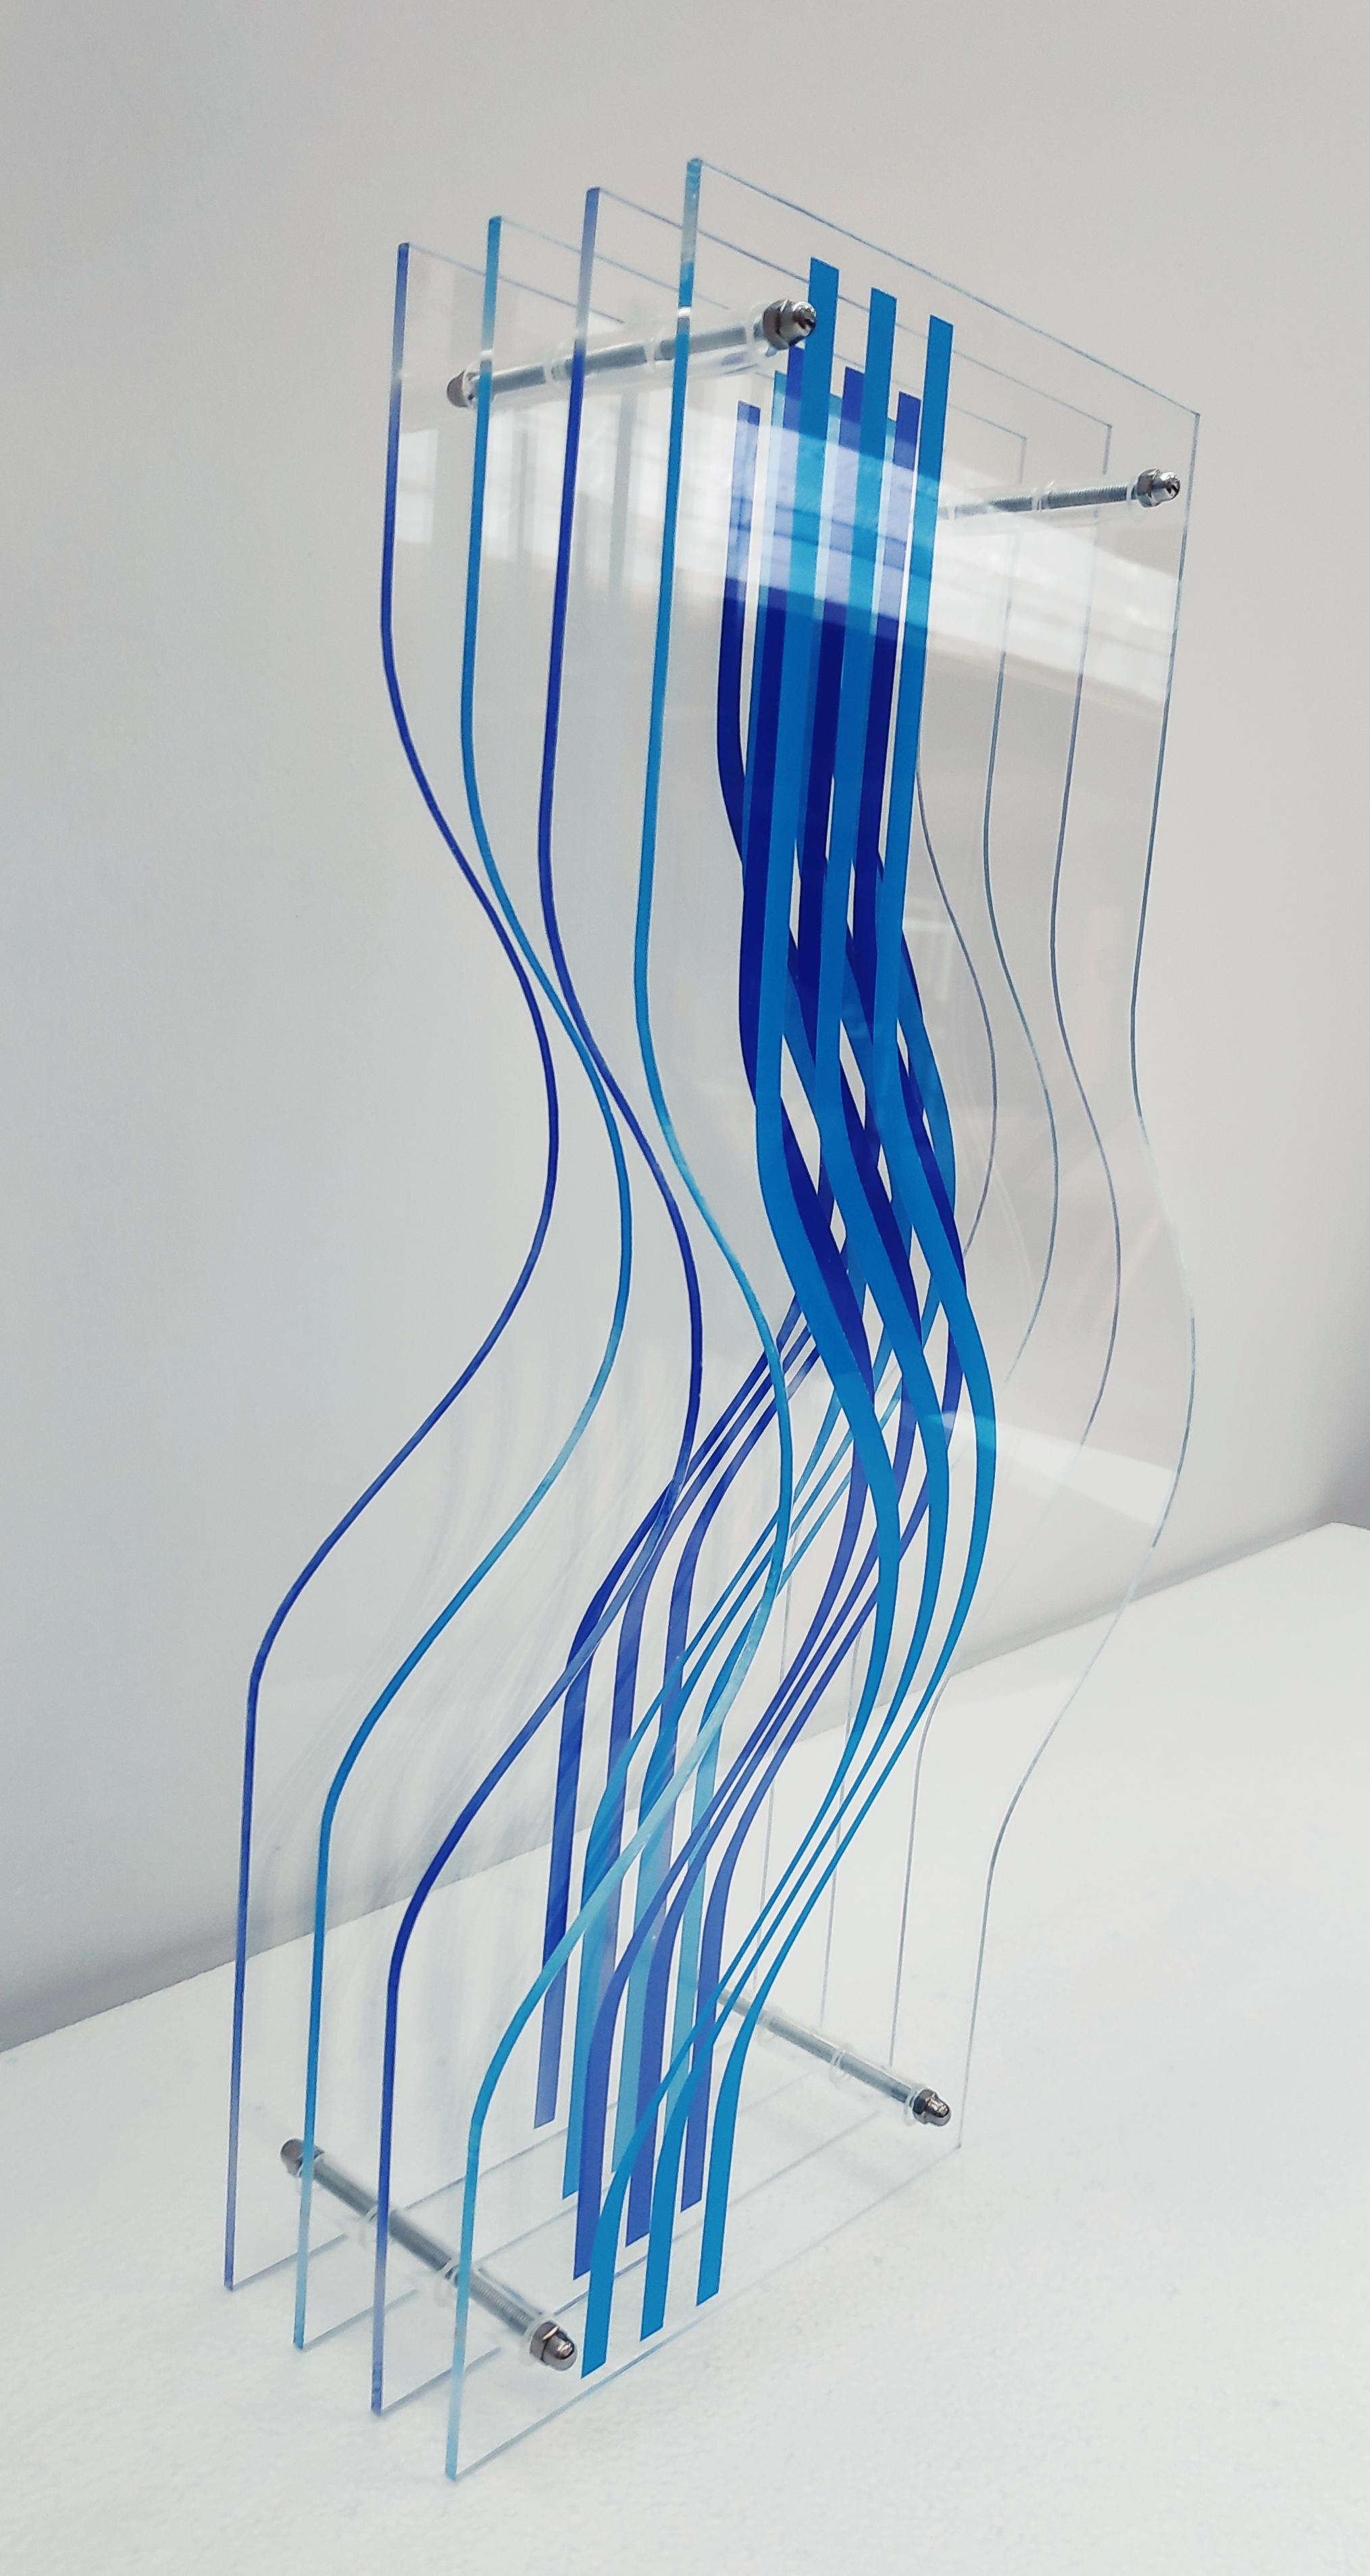 Blue contorsion, (Methacrylate) - Op Art Sculpture by Cristina Ghetti